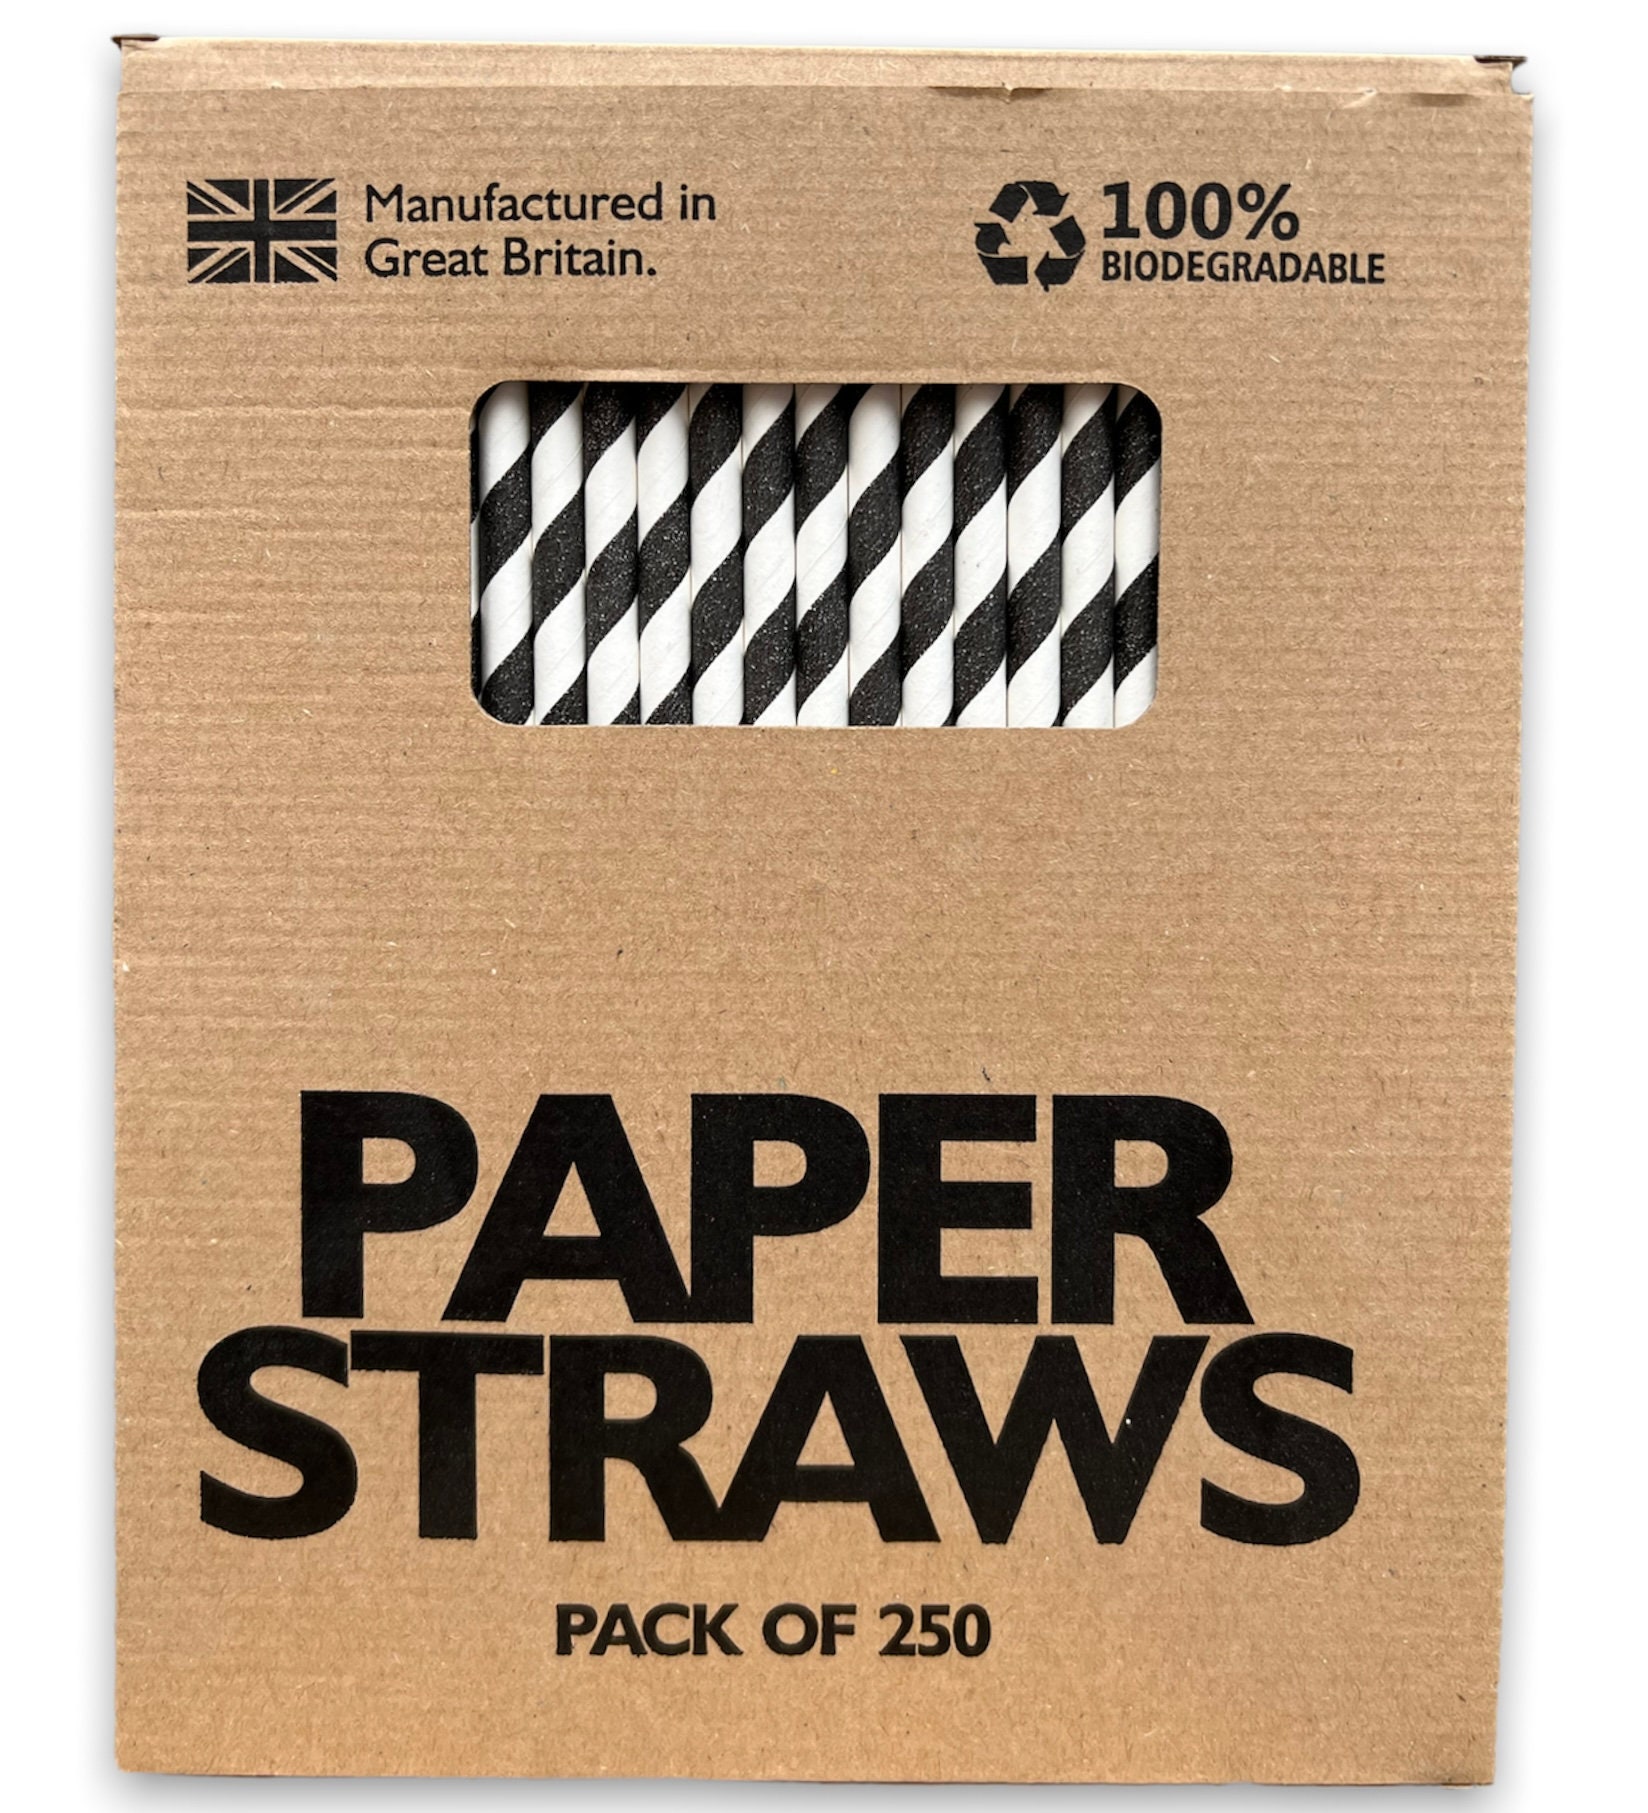 10 Red Striped Jumbo Paper Straws - 4800 Ct.